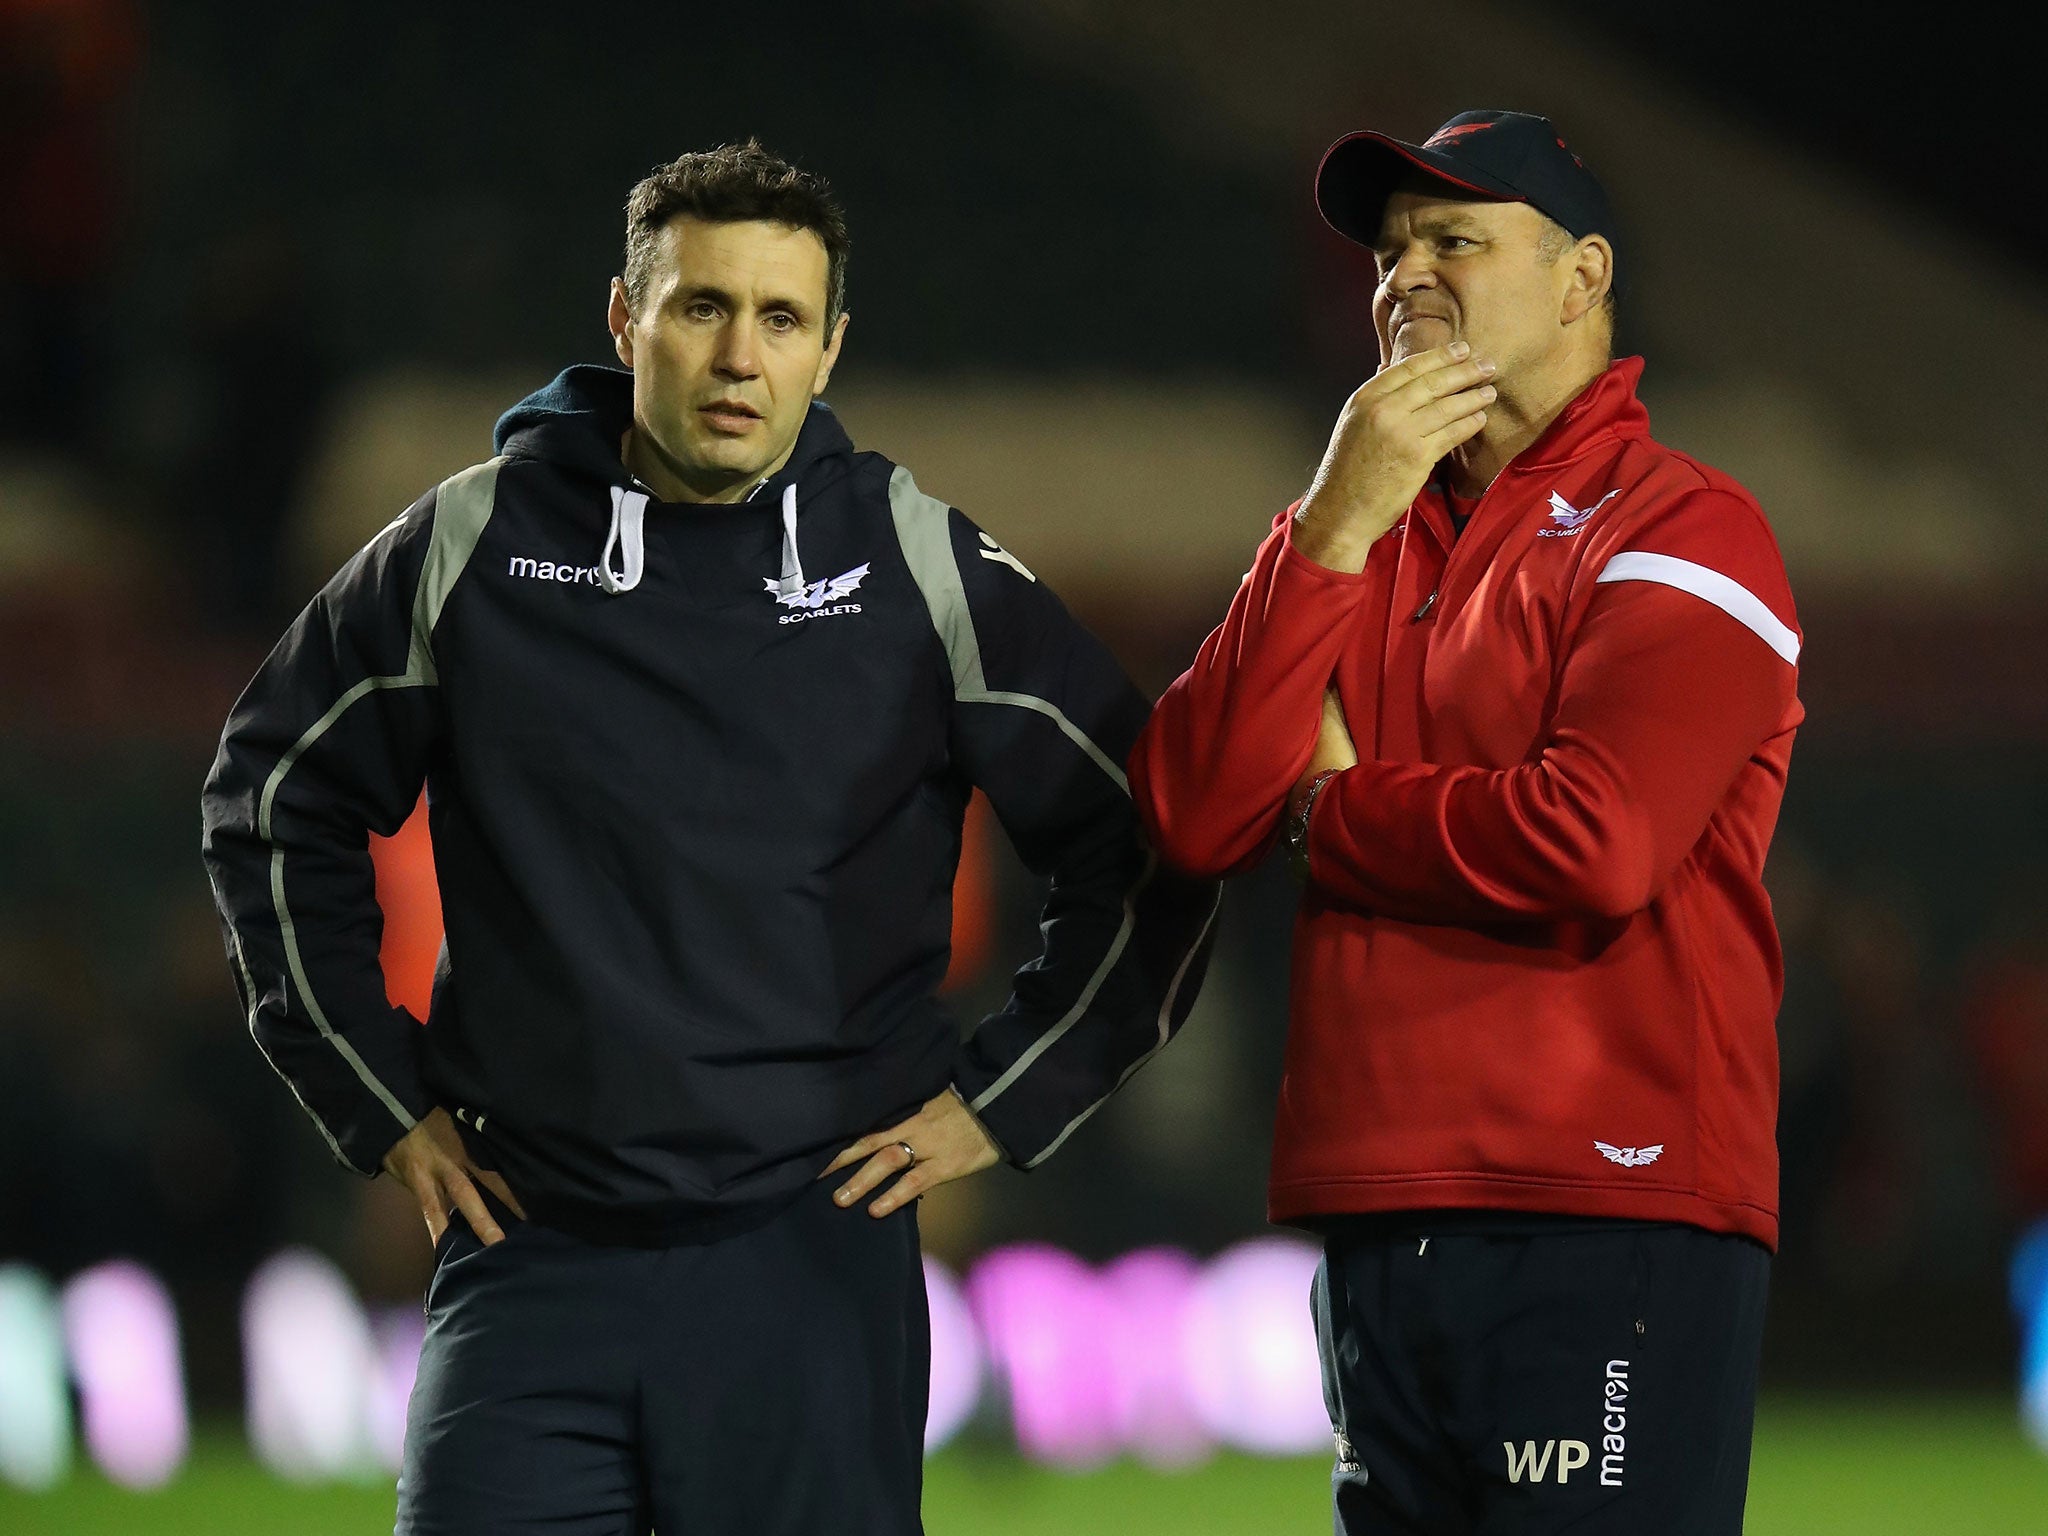 Stephen Jones (left) will follow Wayne Pivac into the Wales set-up